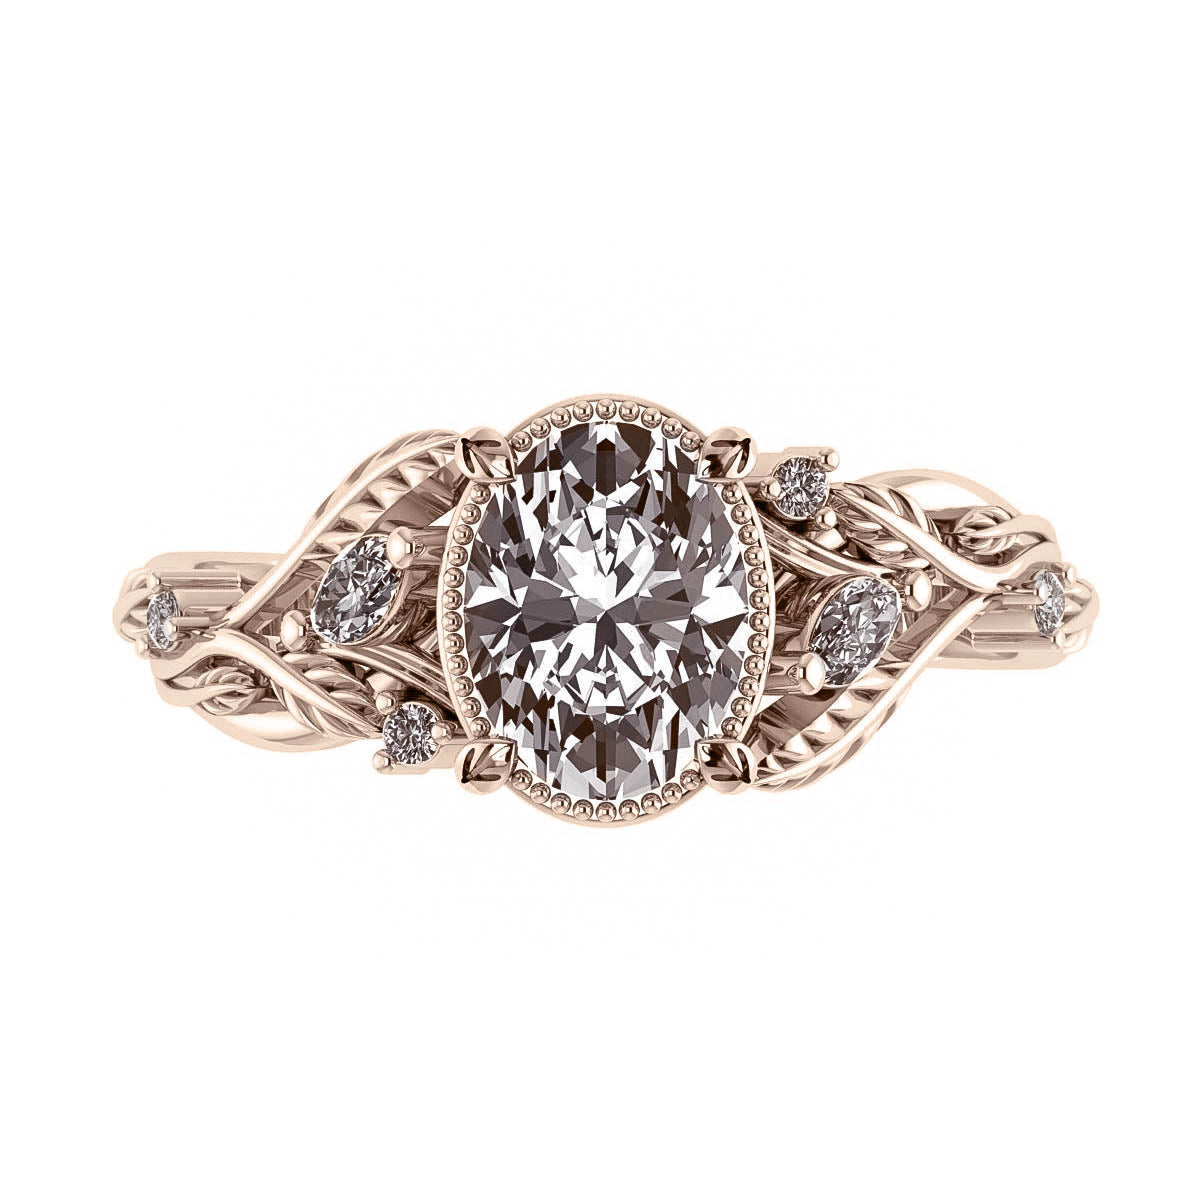 Engraved Filigree 1920s Diamond Engagement Ring Platinum